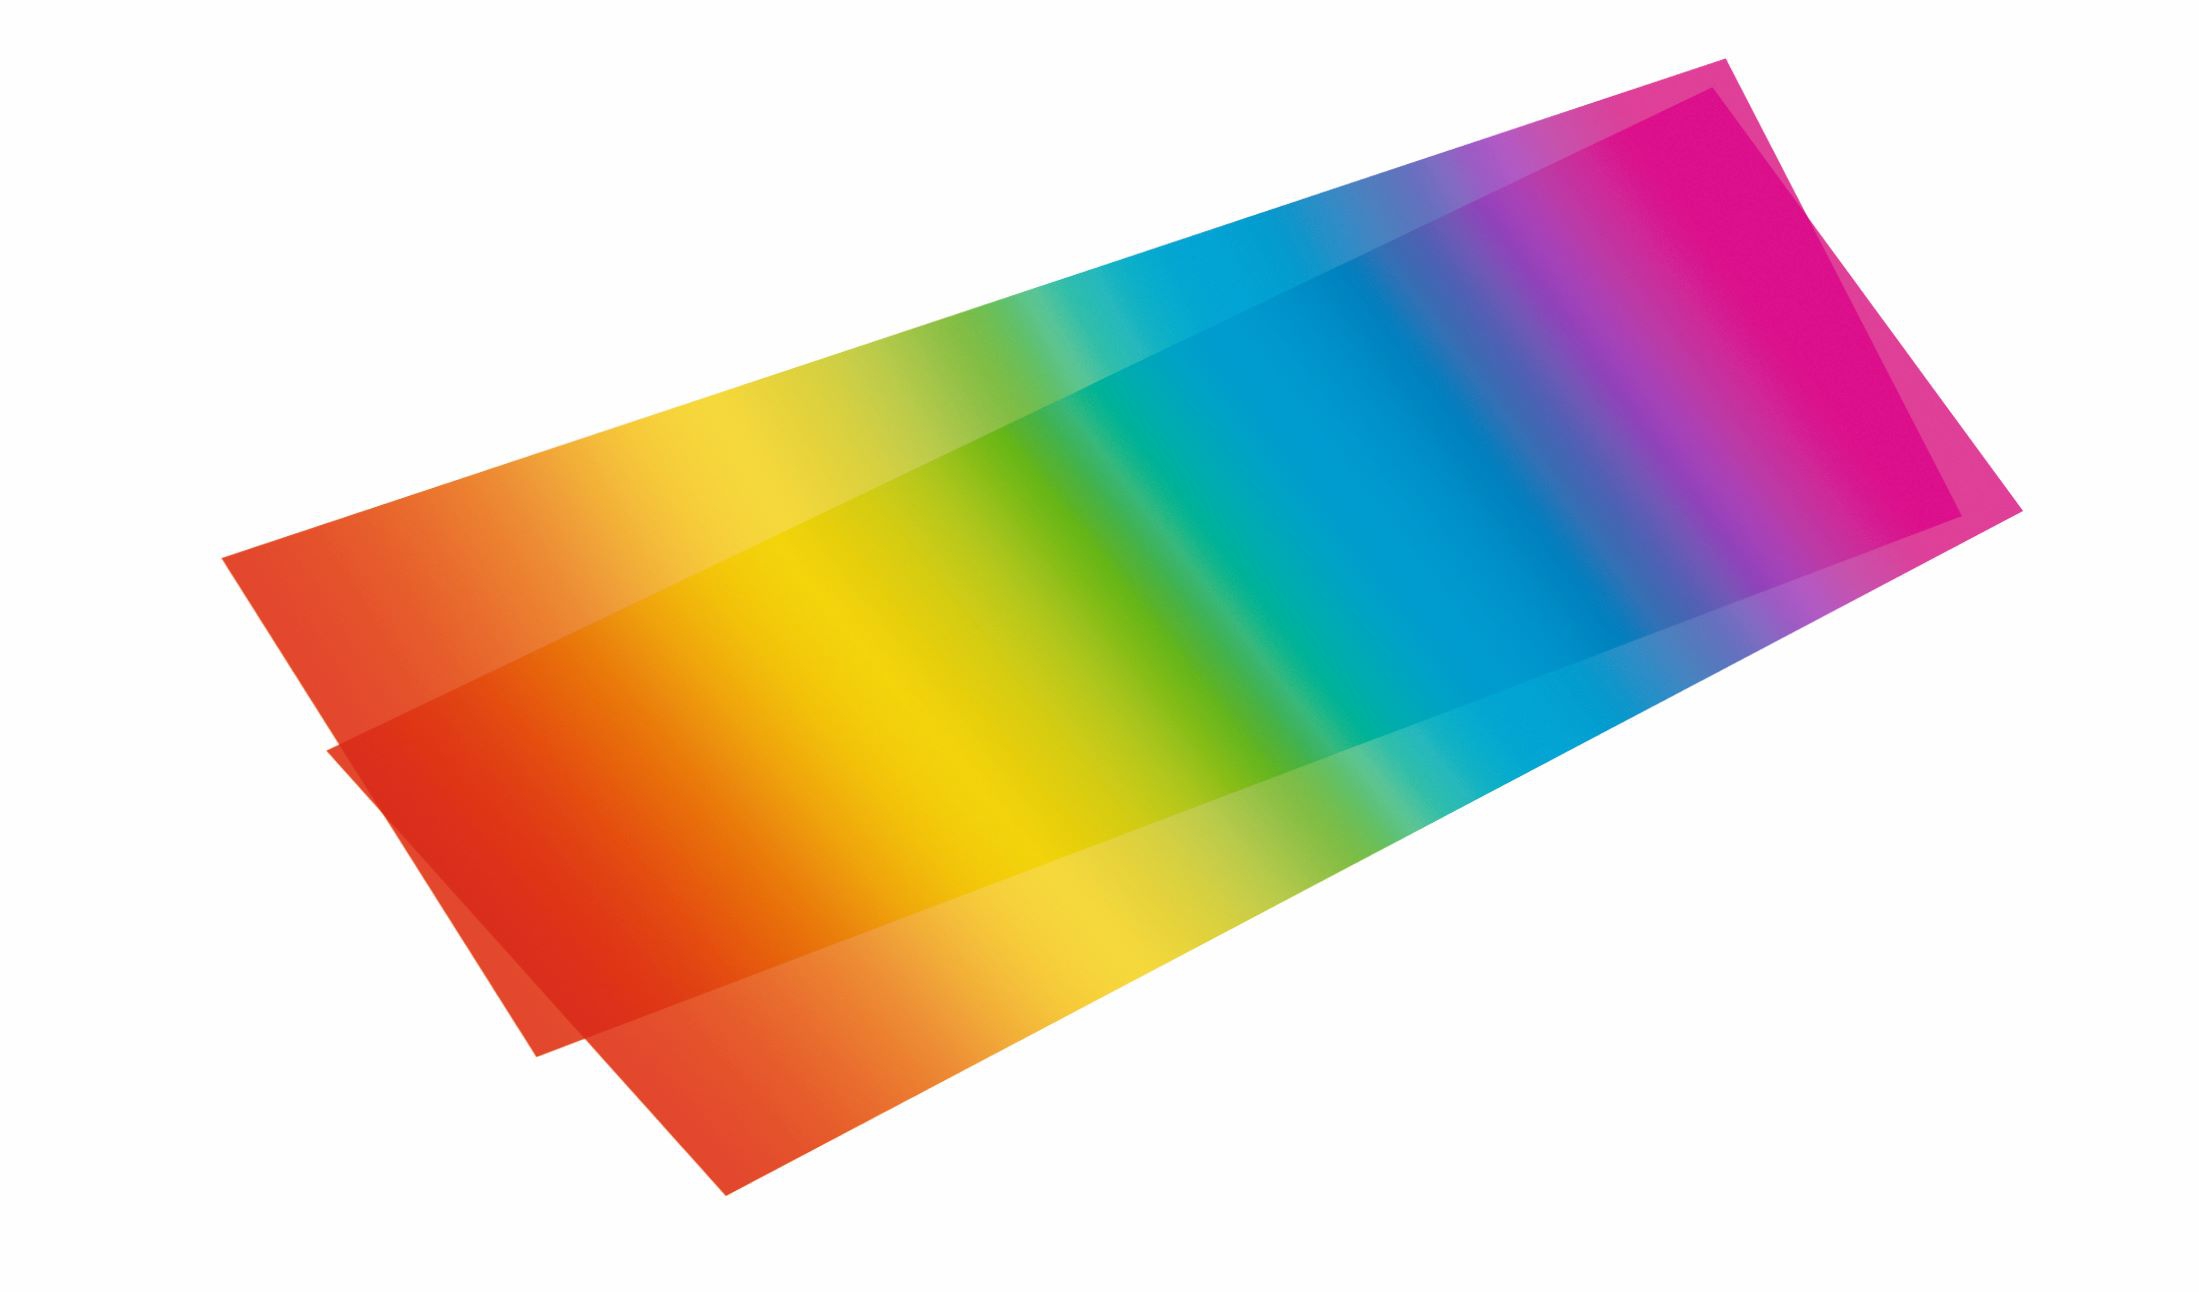 Laternenzuschnitt aus Regenbogentransparentpapier